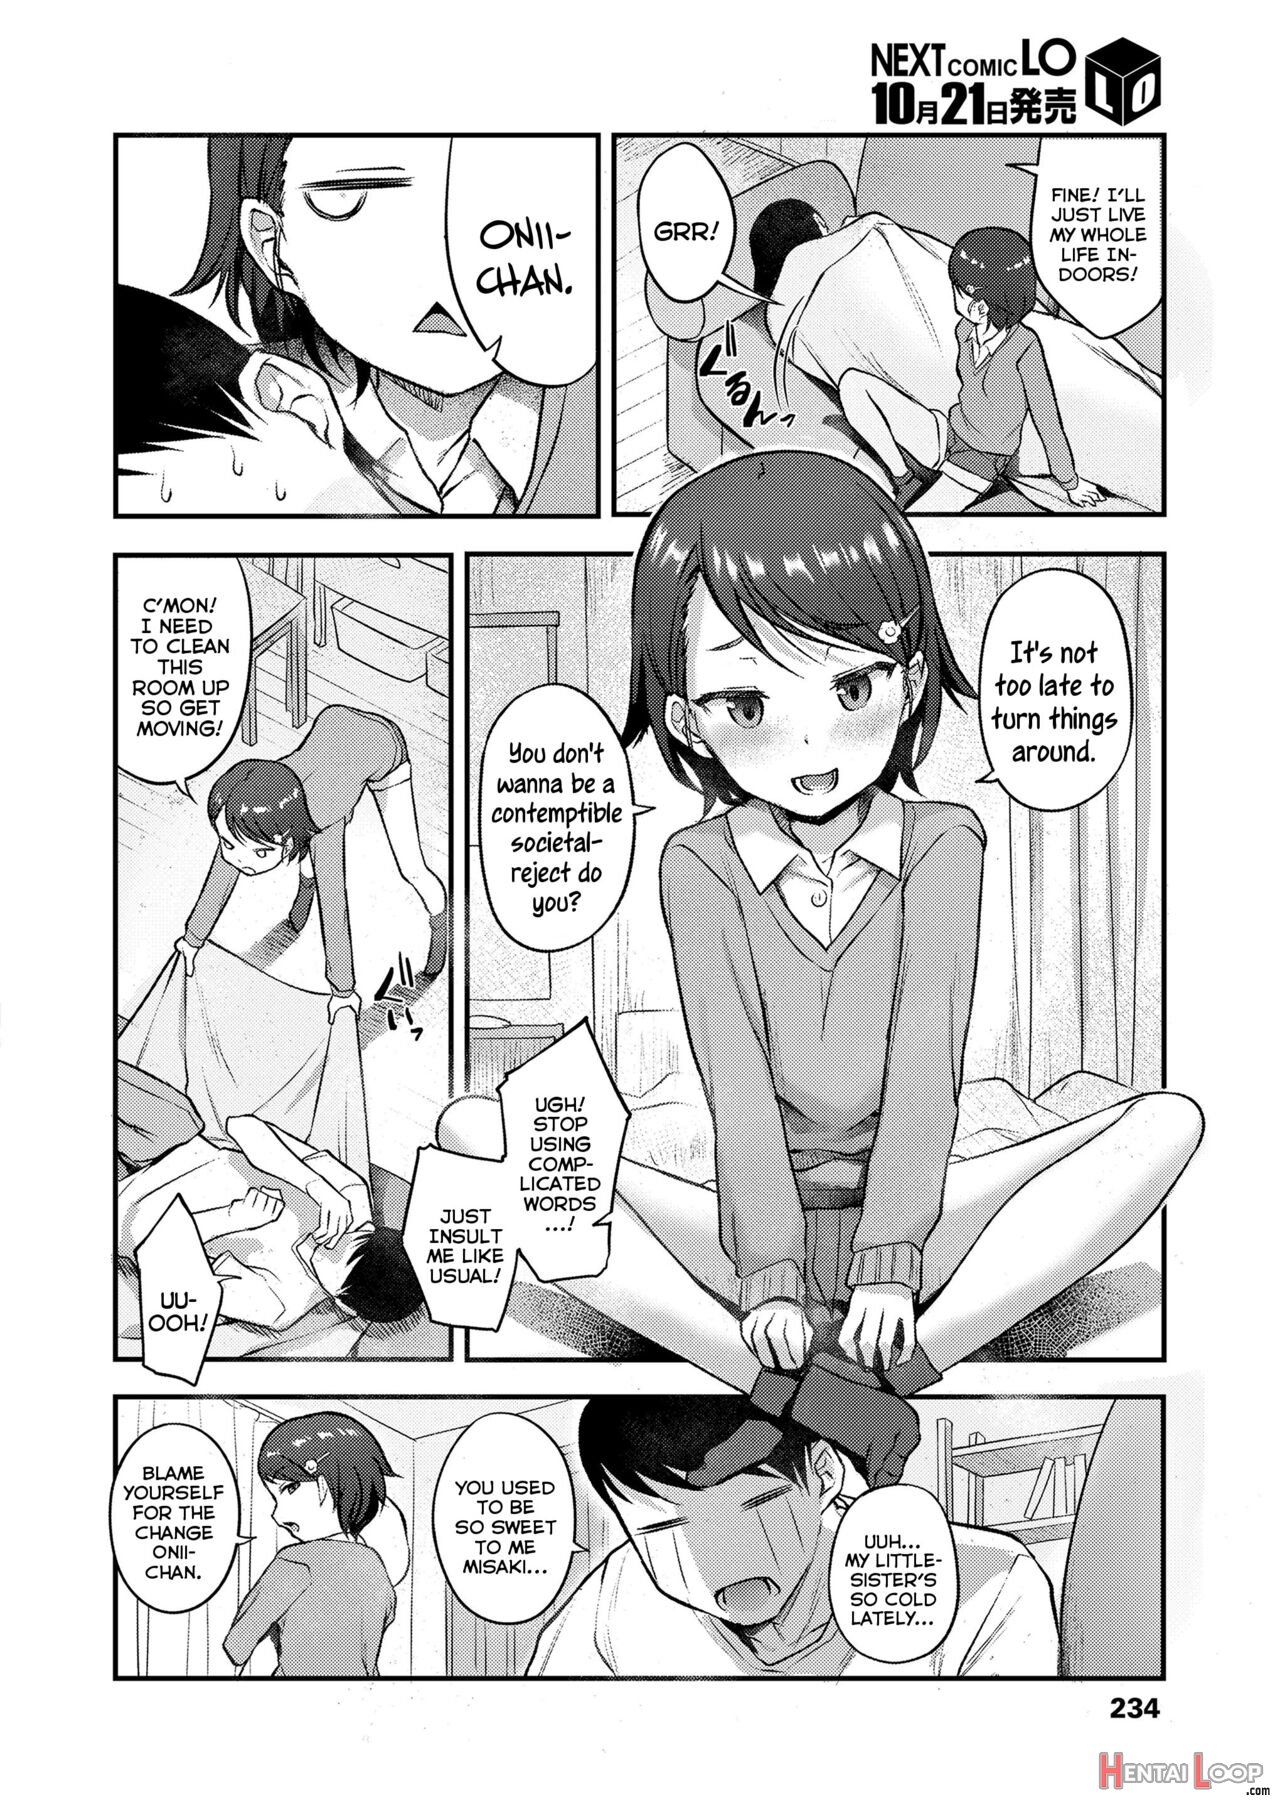 A Serious Little-sister's Secret Intent page 2